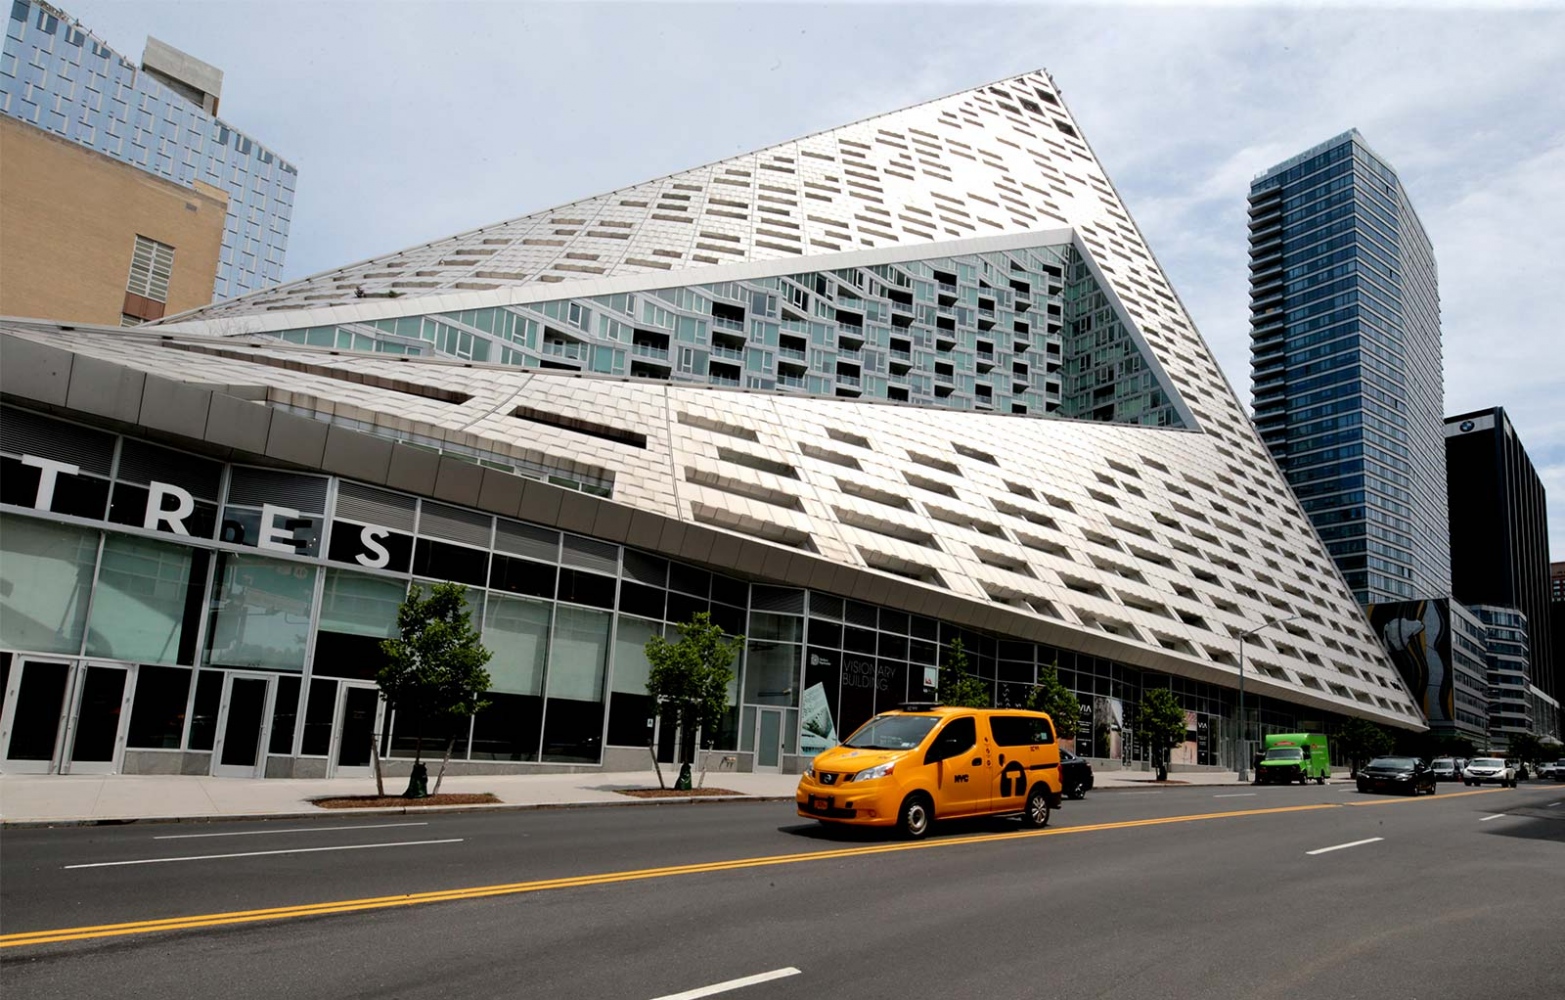 Architecture - Via Building - New York